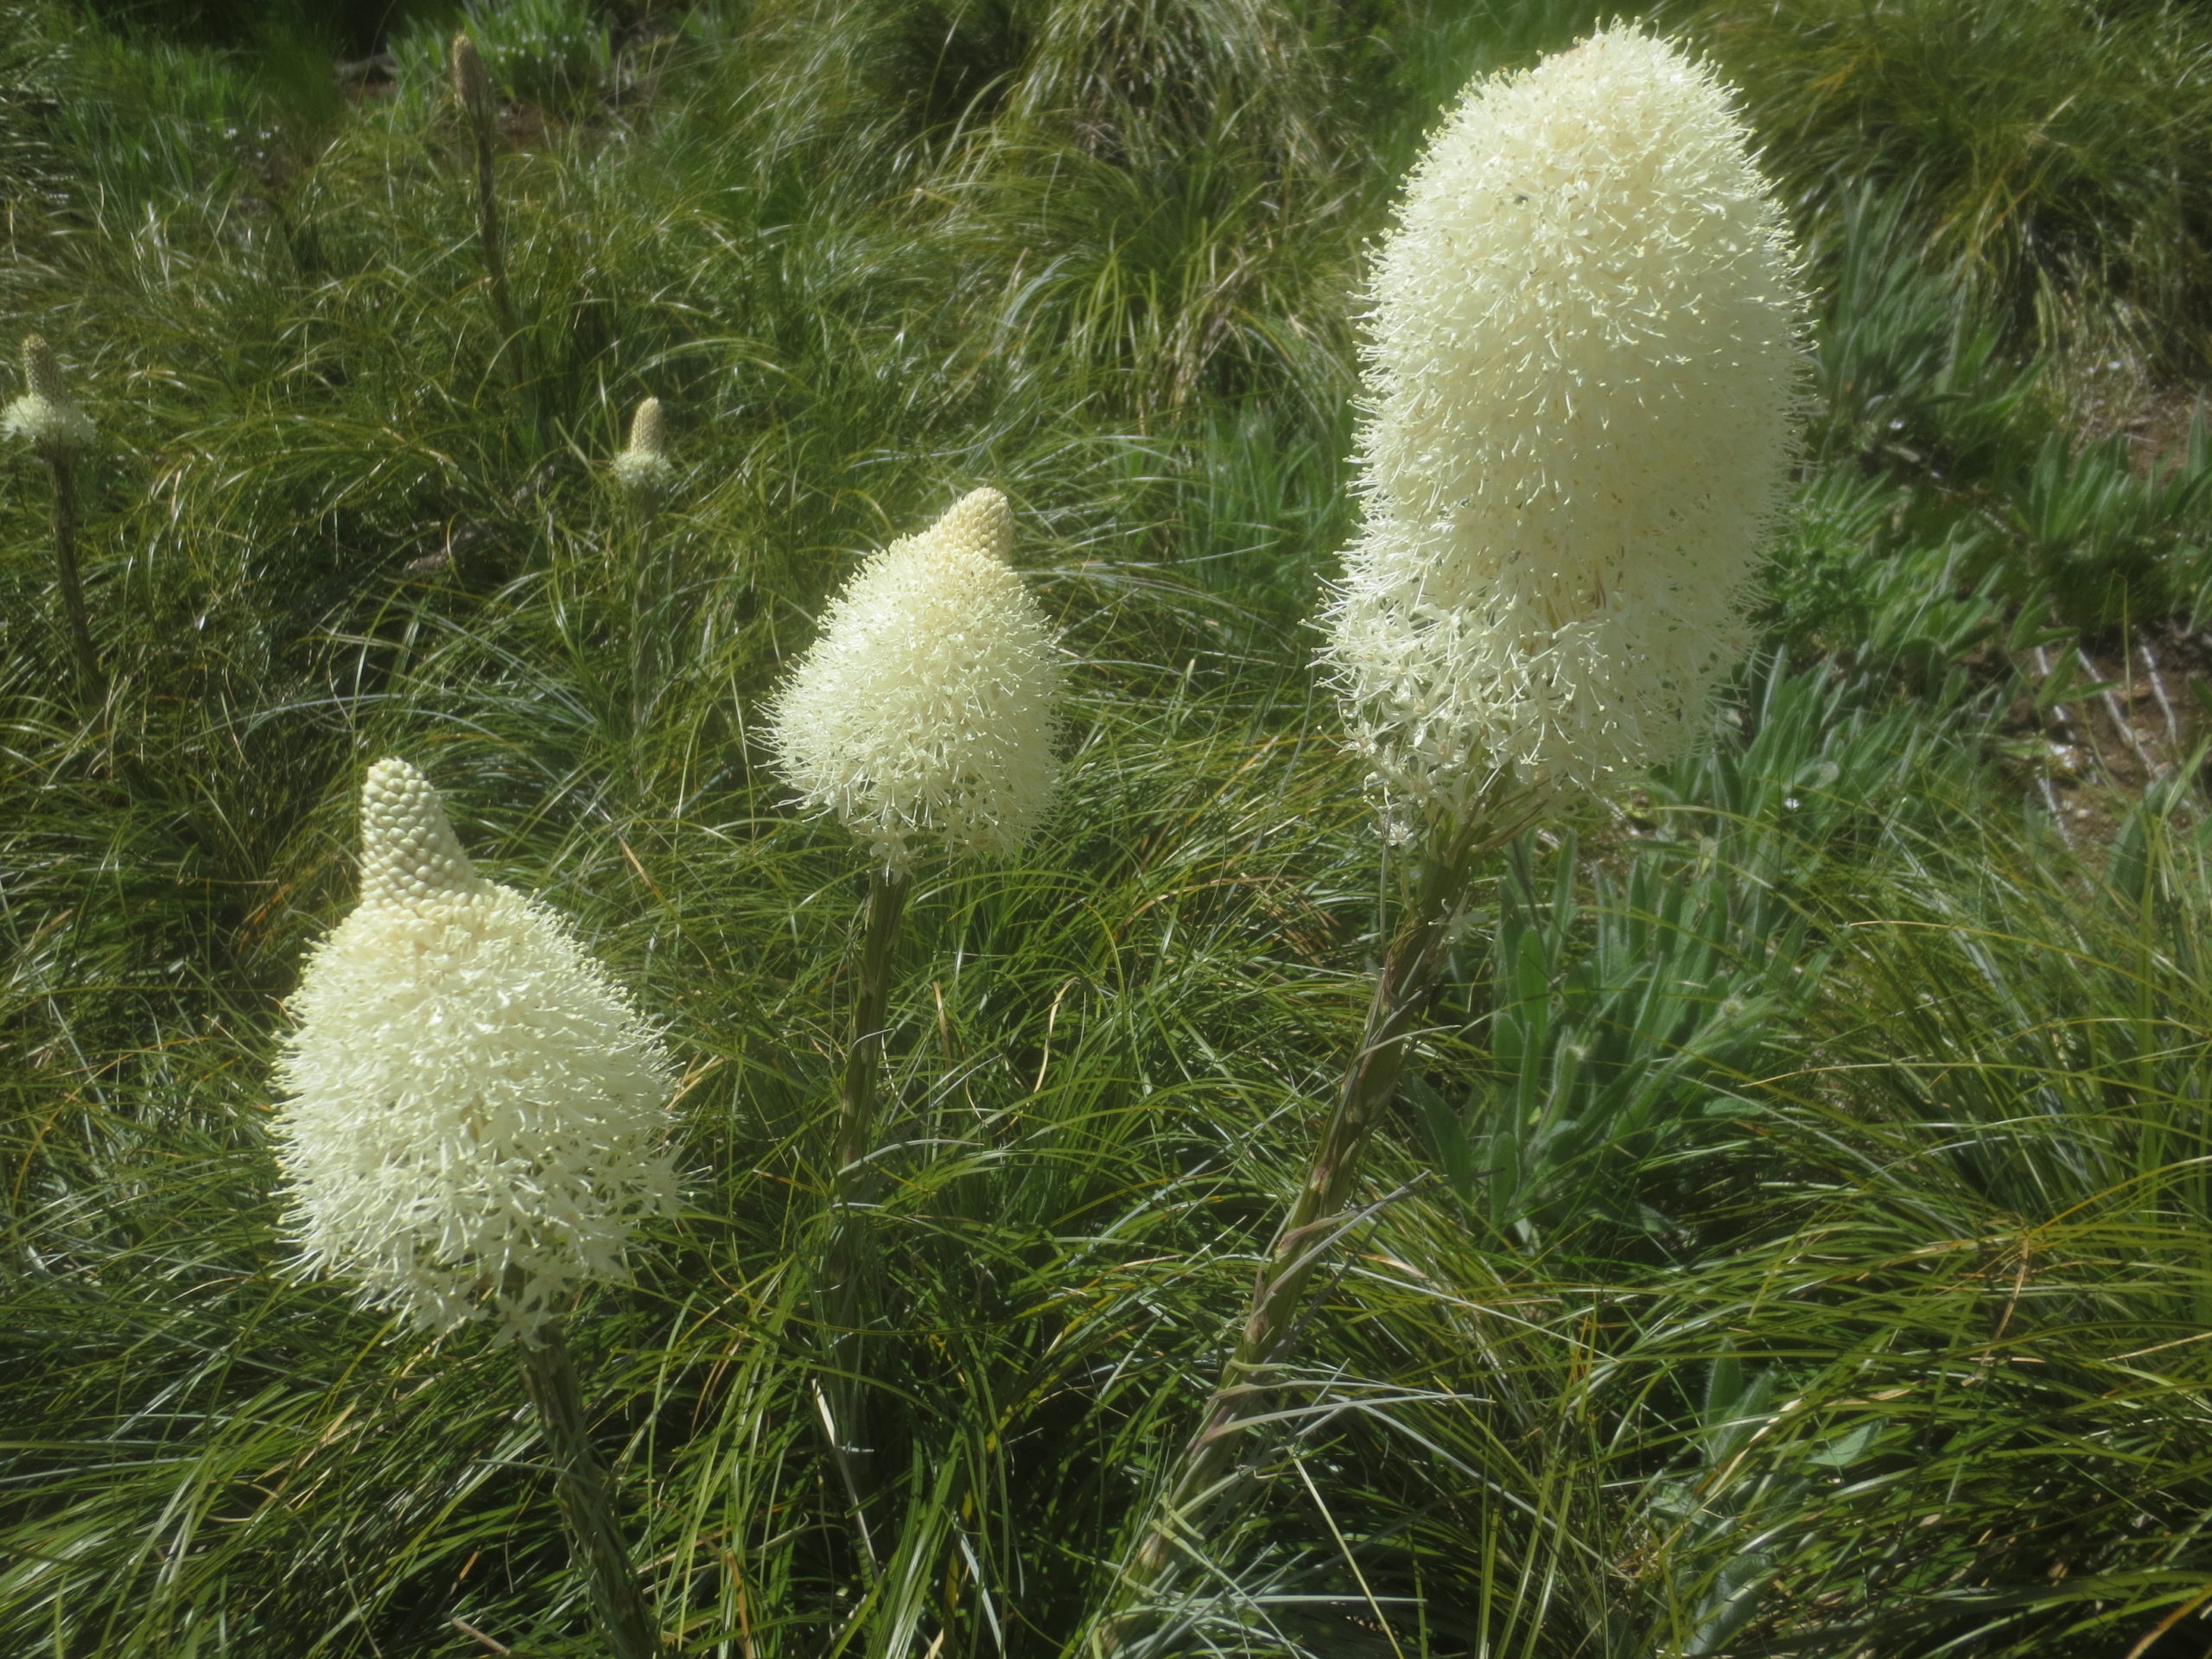 beargrass in bloom on a mountainside